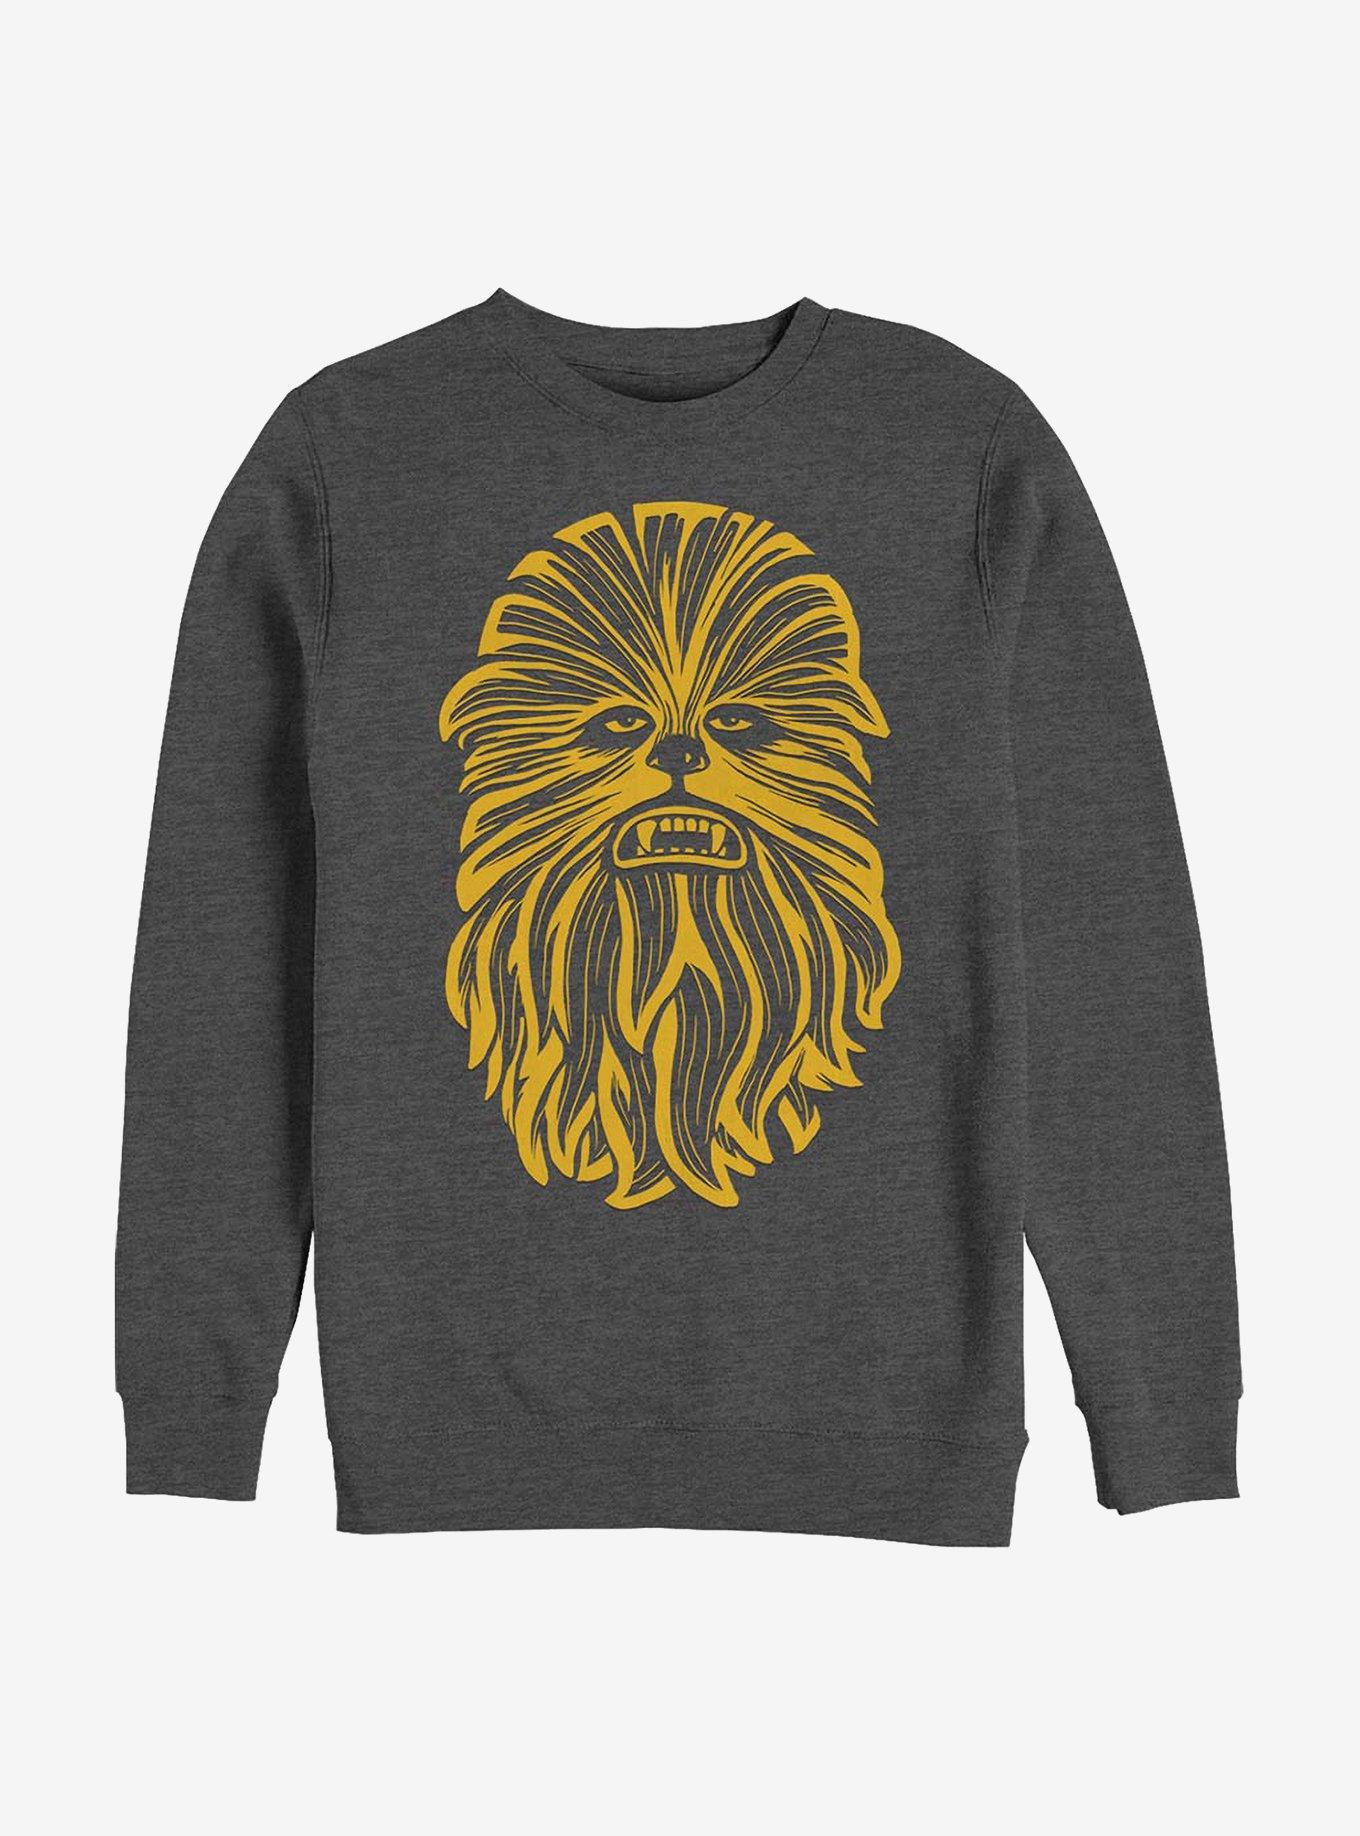 Star Wars Chewie Time Crew Sweatshirt, CHAR HTR, hi-res